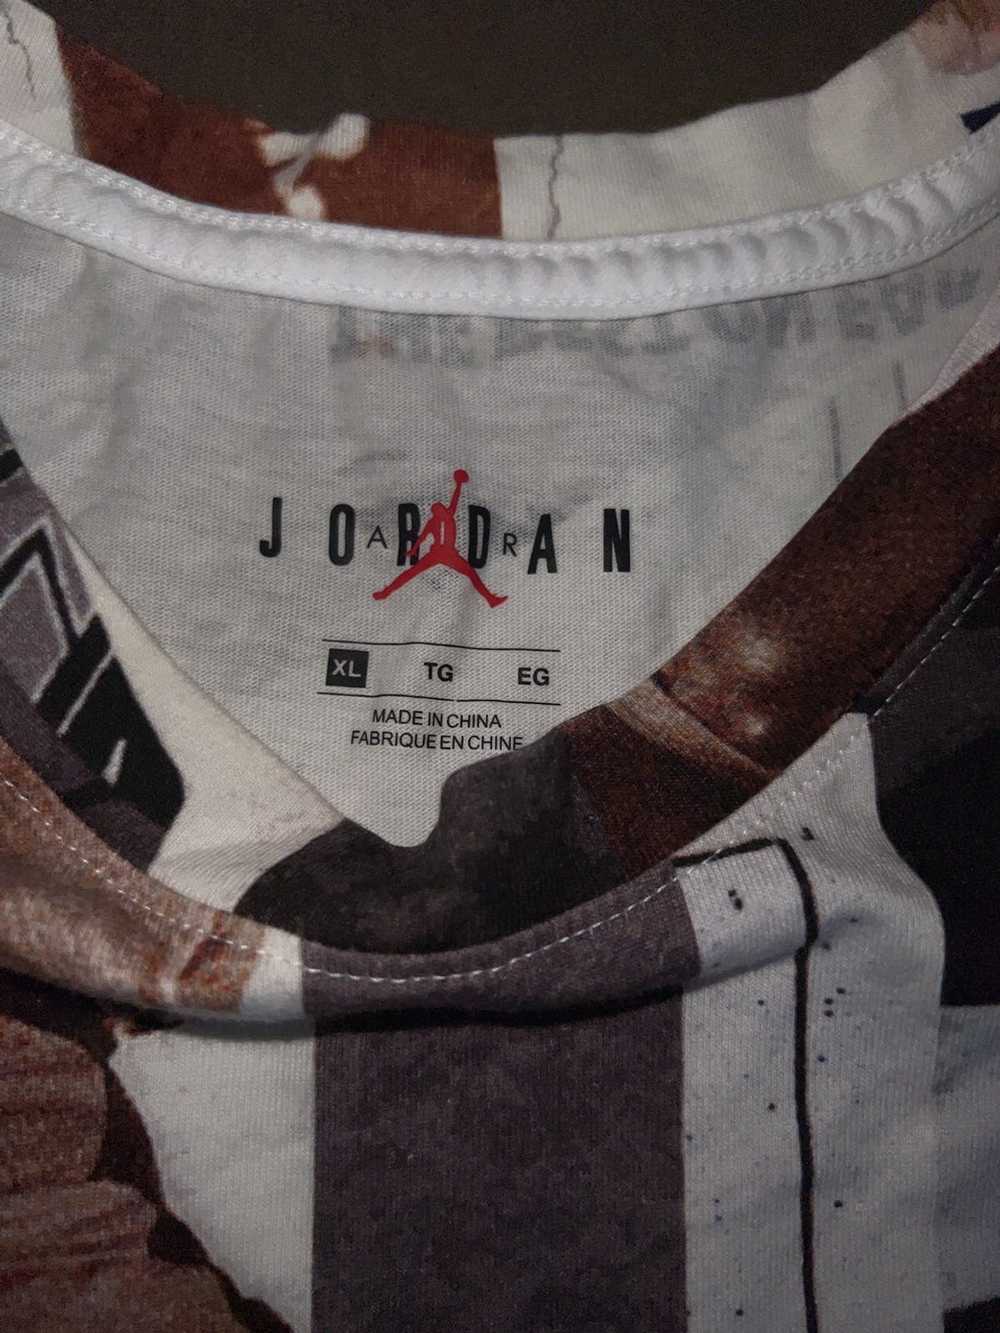 Jordan Brand Jordan Bran 360 Slam T Shirt - image 2